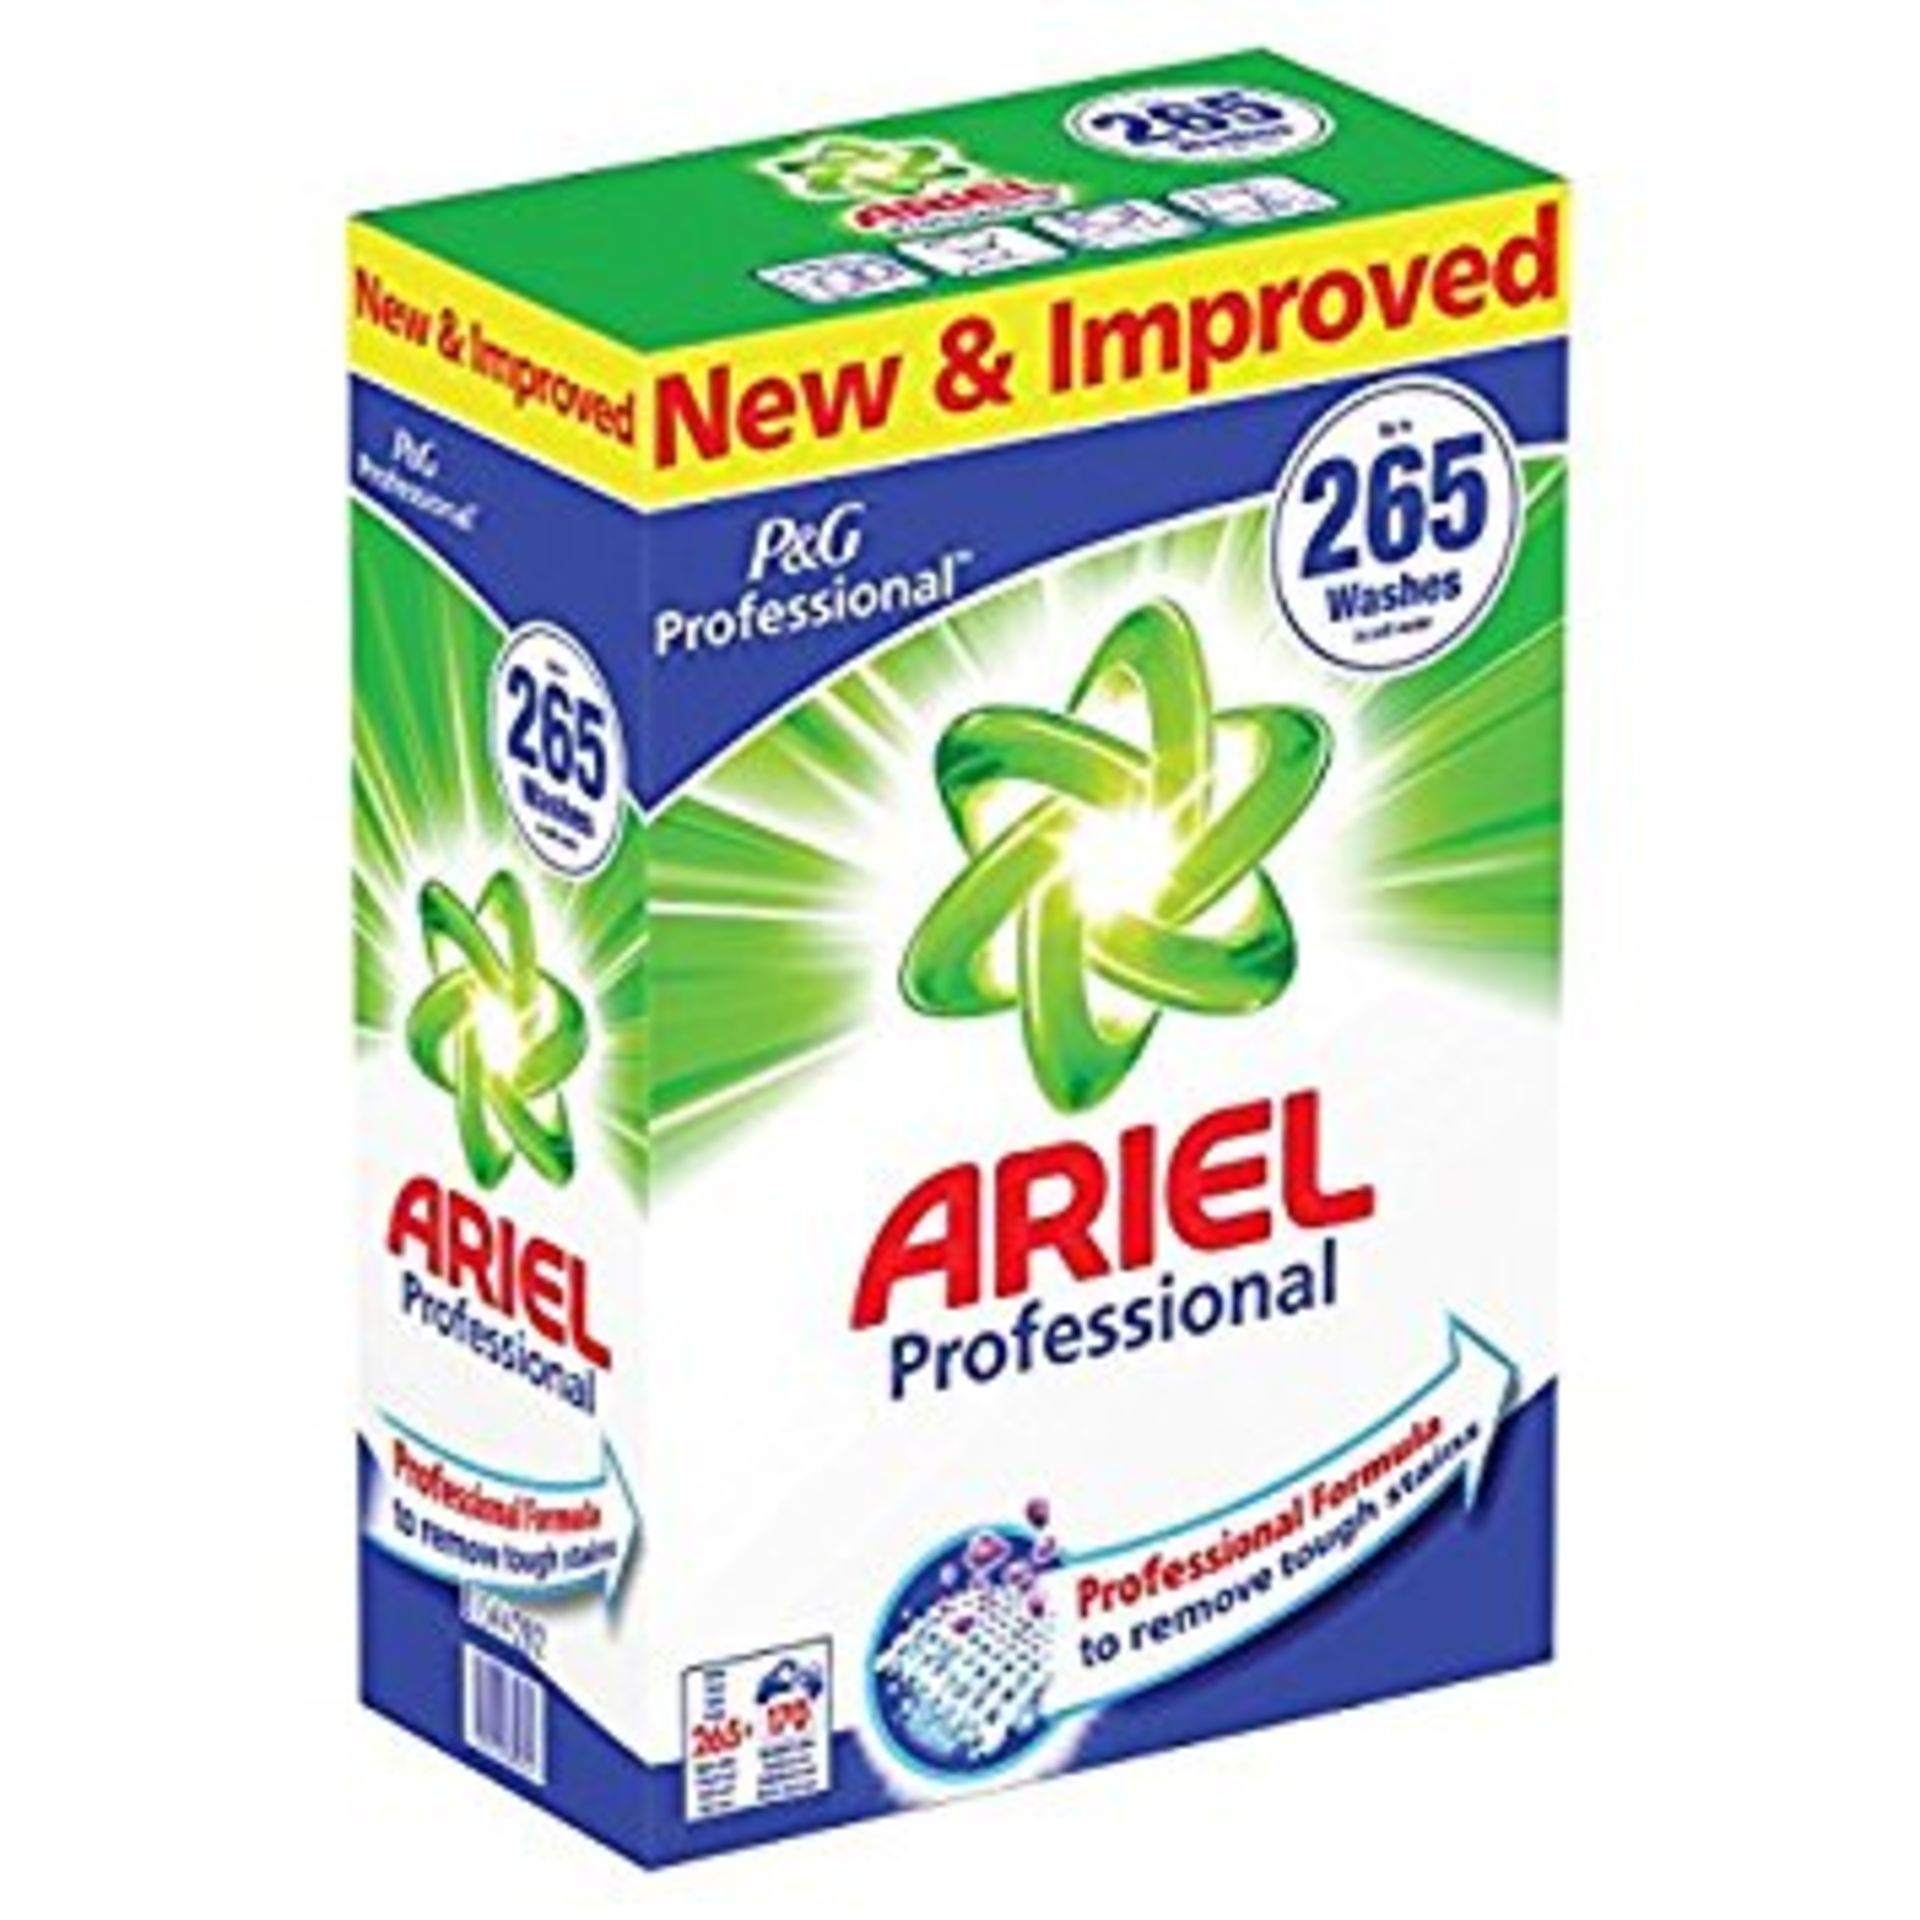 V *TRADE QTY* Brand New Ariel Professional XXL 265 Washes Washing Powder X 72 YOUR BID PRICE TO BE